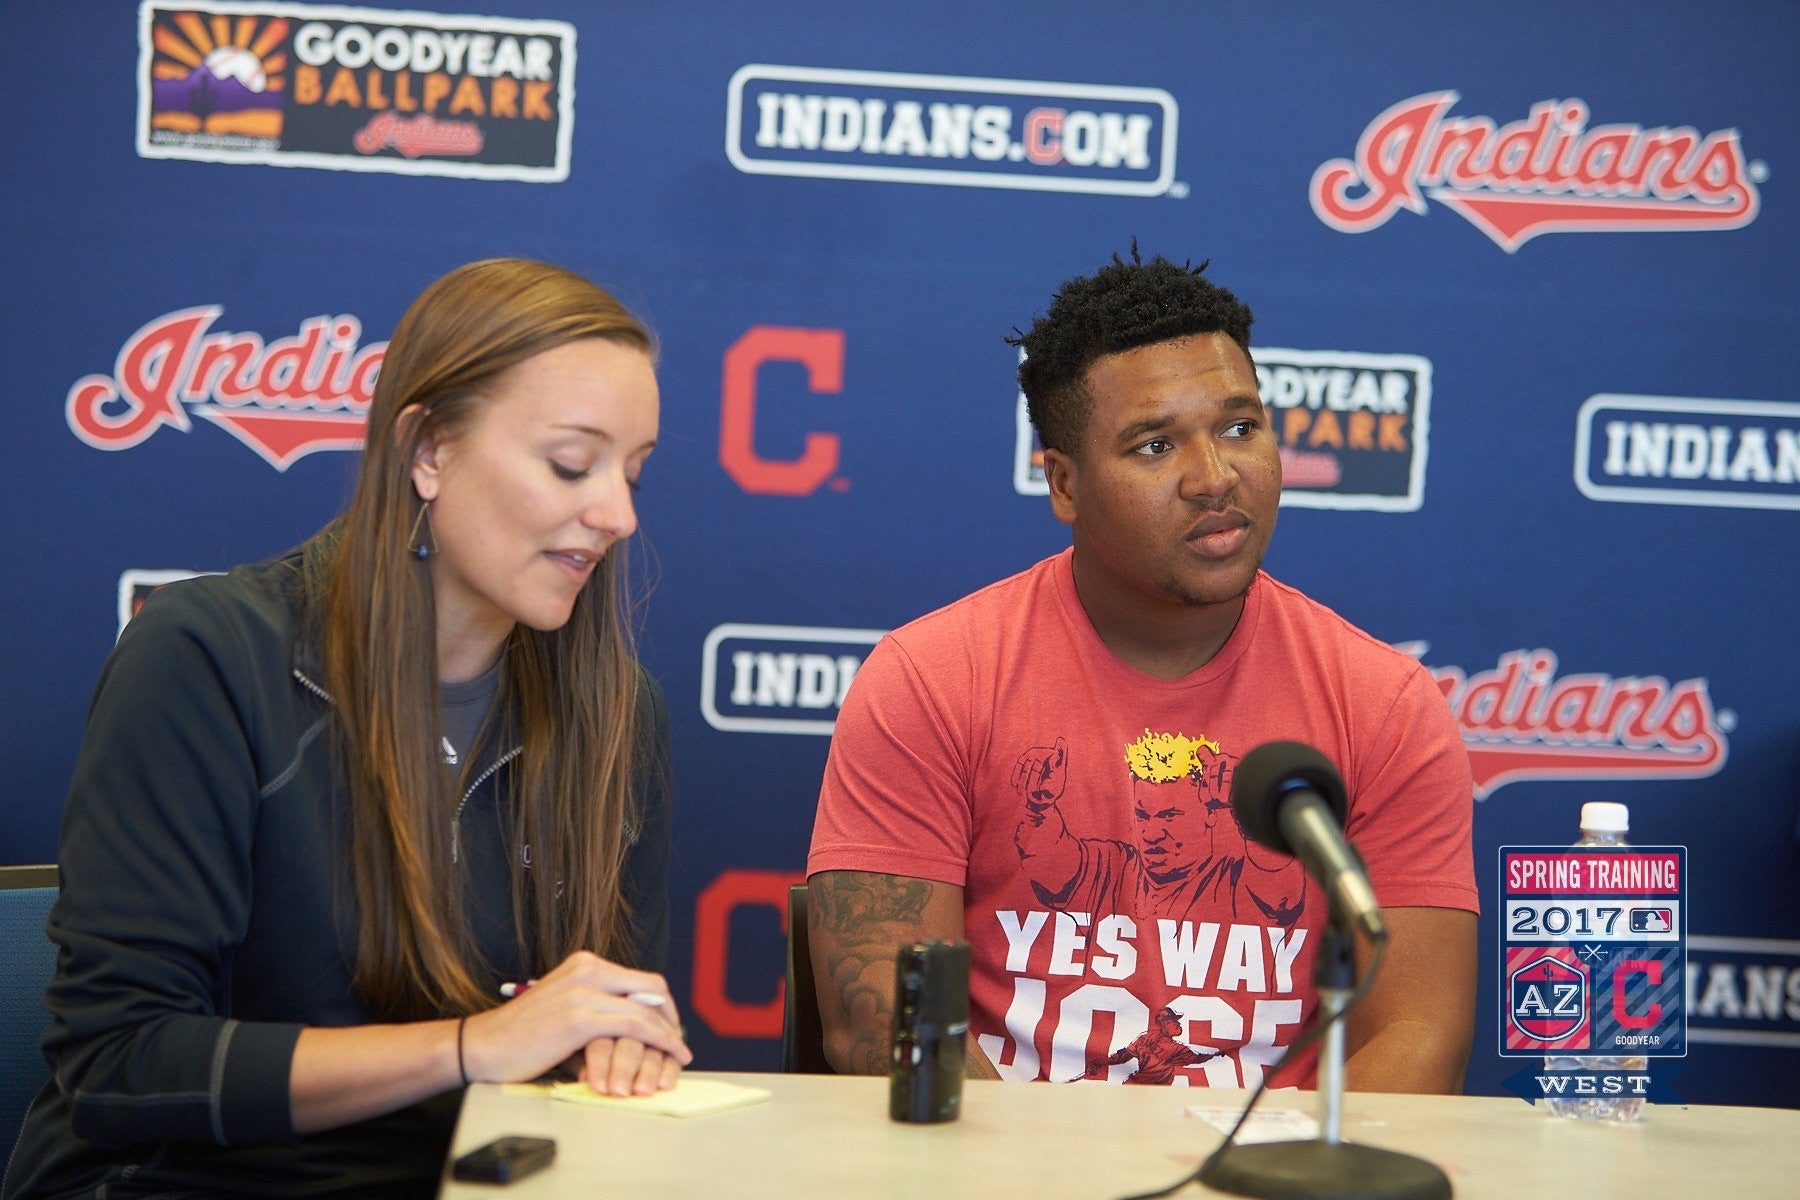 Shirts & Tops, Cleveland Indiansguardians Jose Ramirez Jersey Tshirt